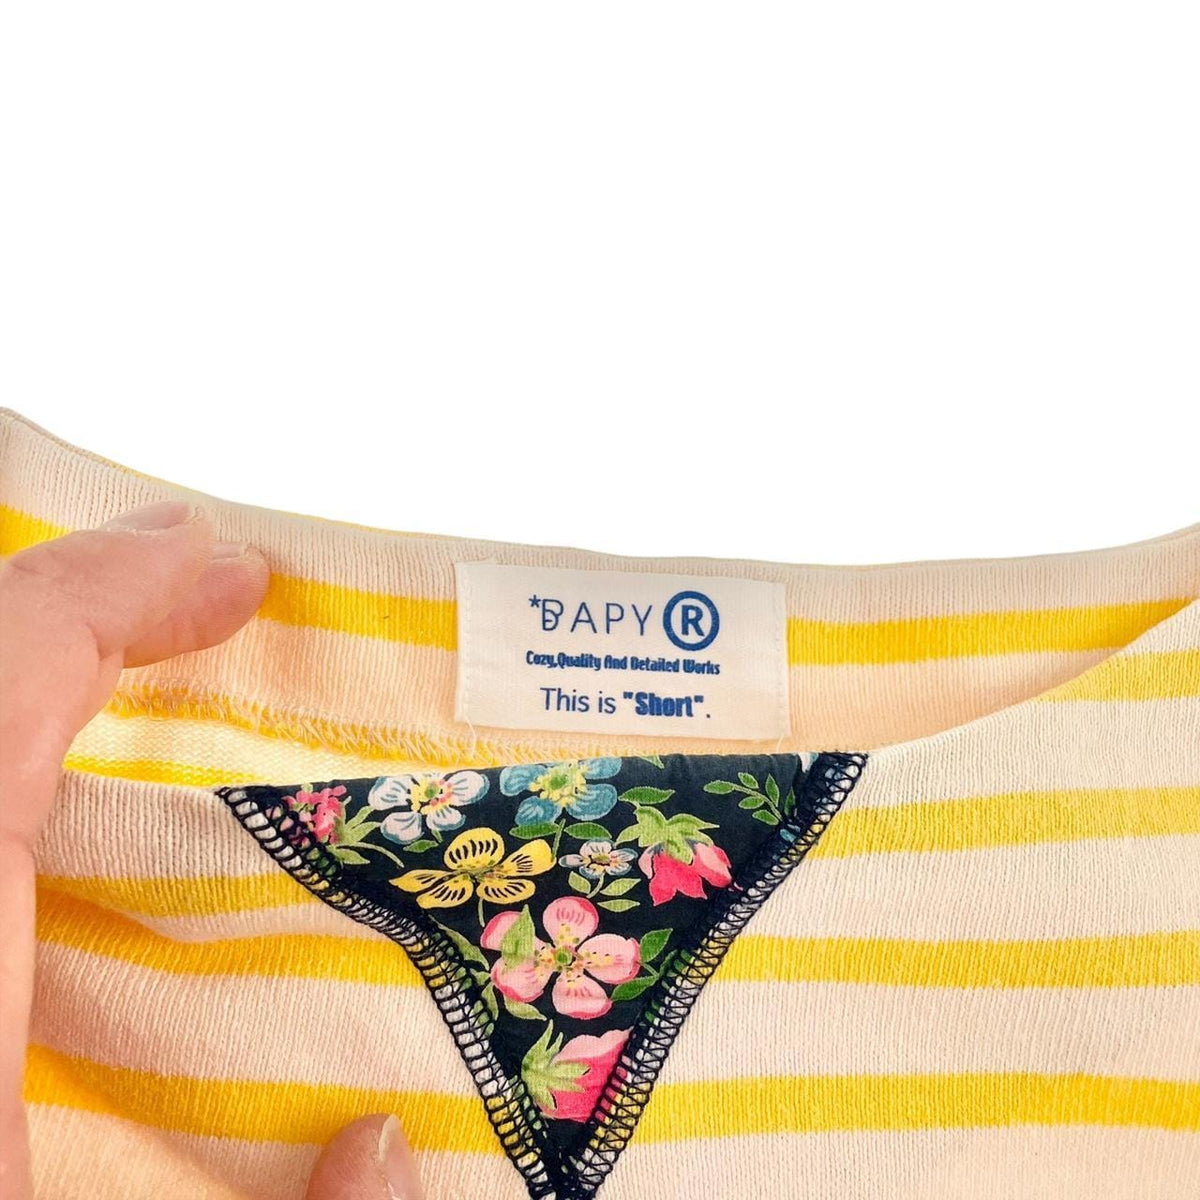 Bape “Bapy” striped long sleeve t shirt woman’s size S